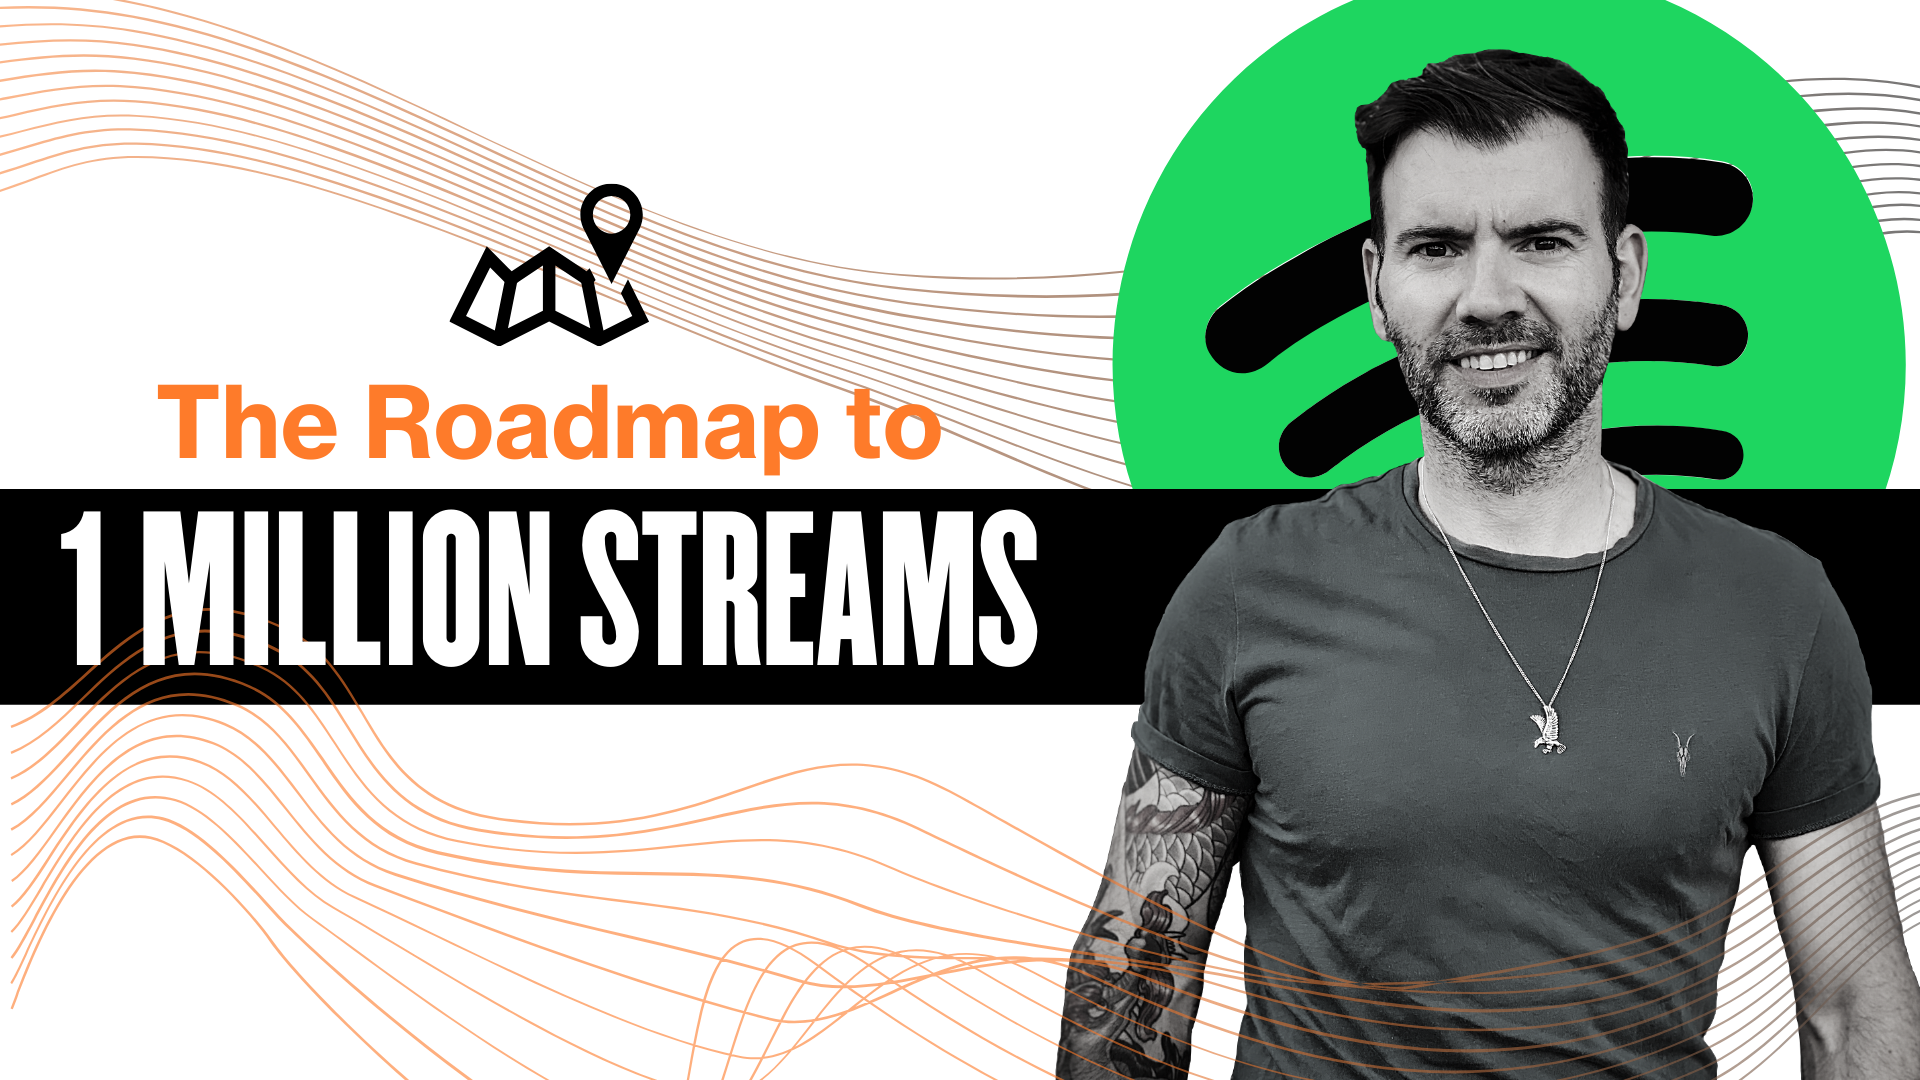 The Roadmap to 1 Million Streams